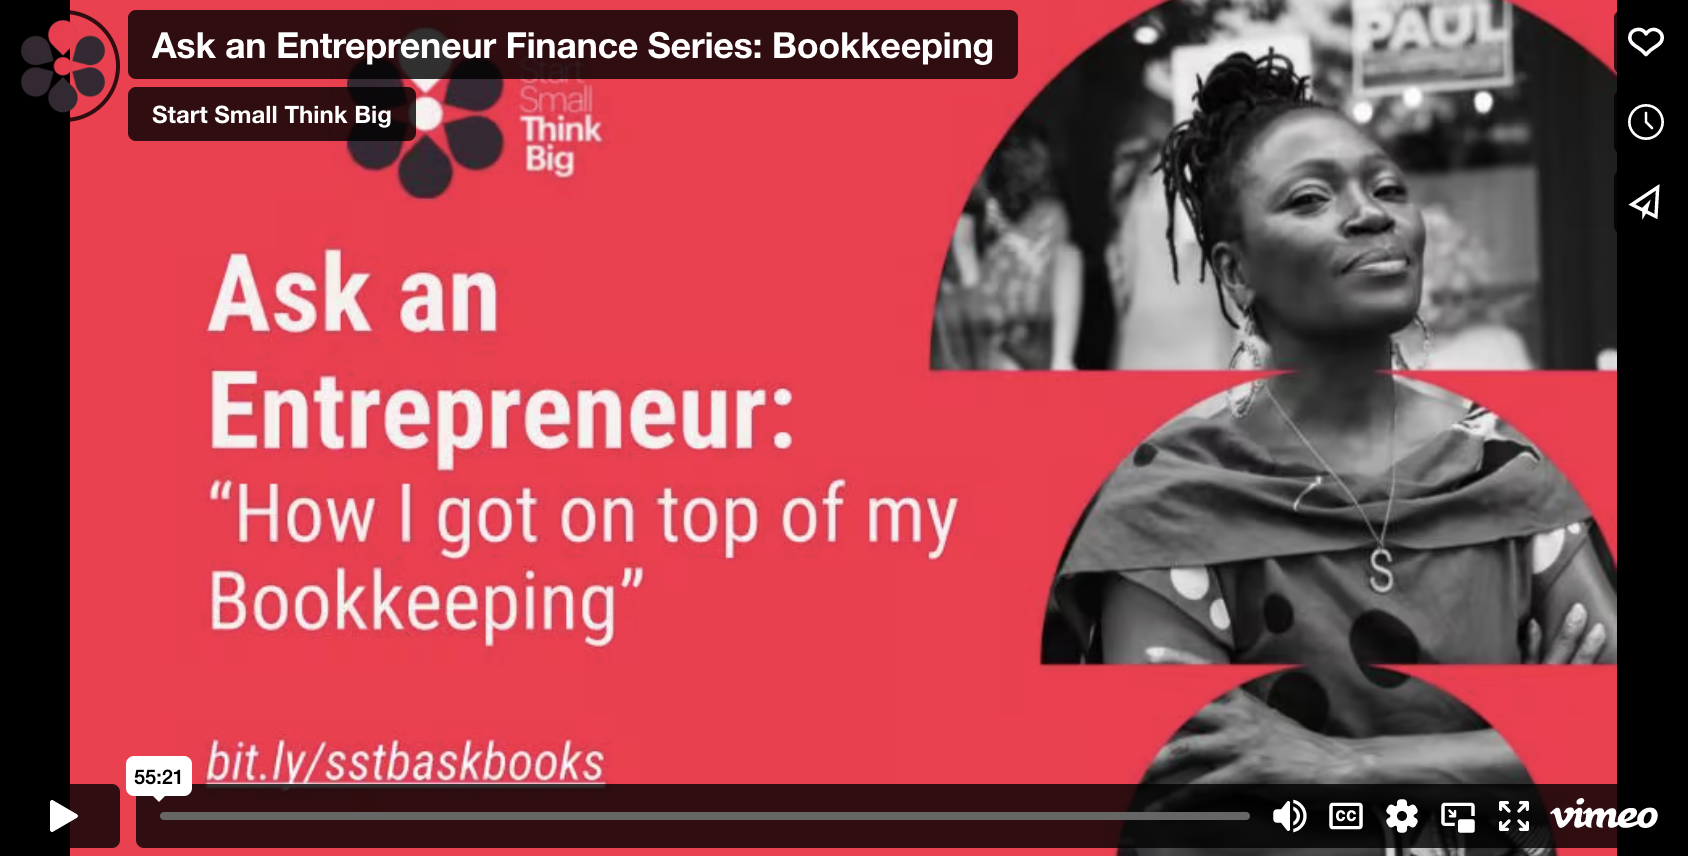 Ask an Entrepreneur Finance Series: Bookkeeping